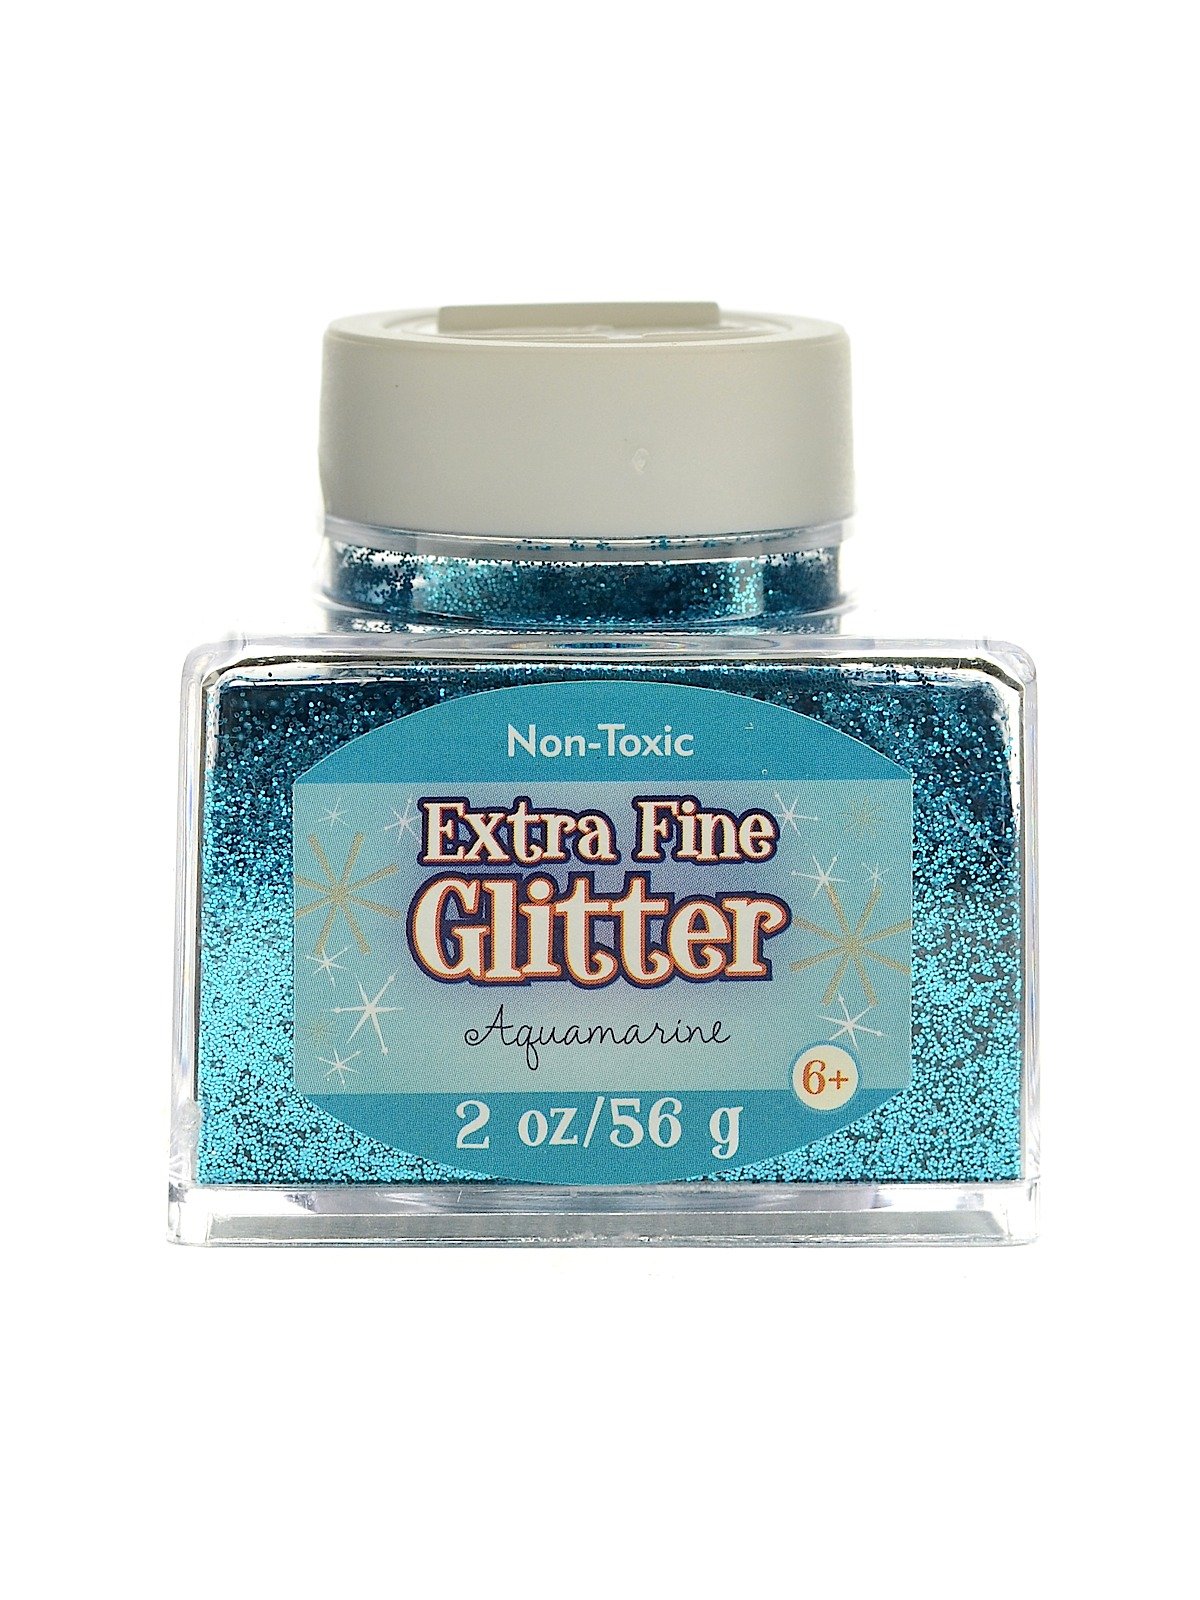 Advantus Scrappy Glue Adhesive for Glitter, Sequins & Paper